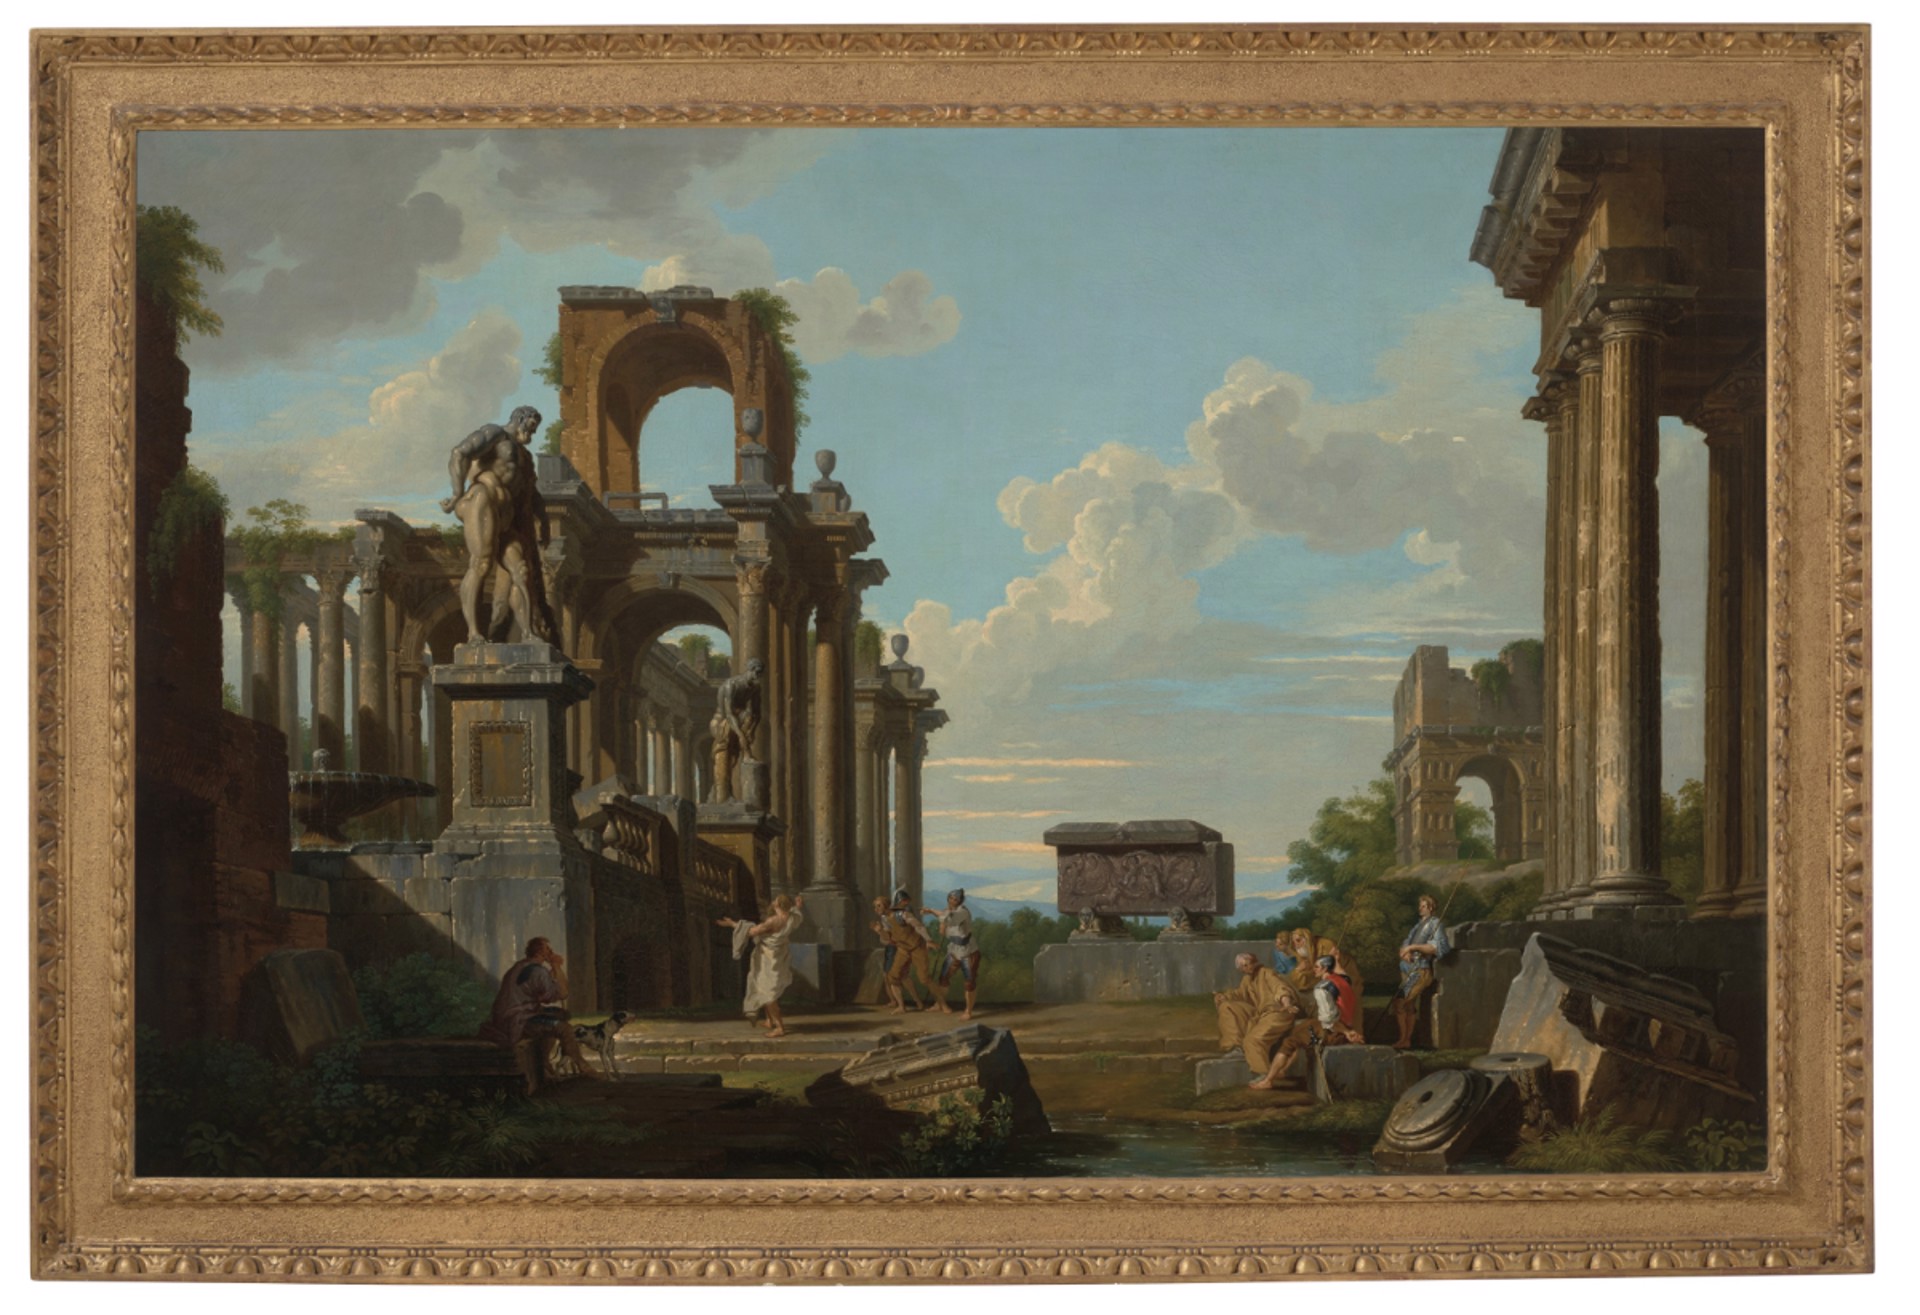 AN ARCHITECTURAL CAPRICCIO WITH THE FARNESE HERCULES by Giovanni Paolo Panini